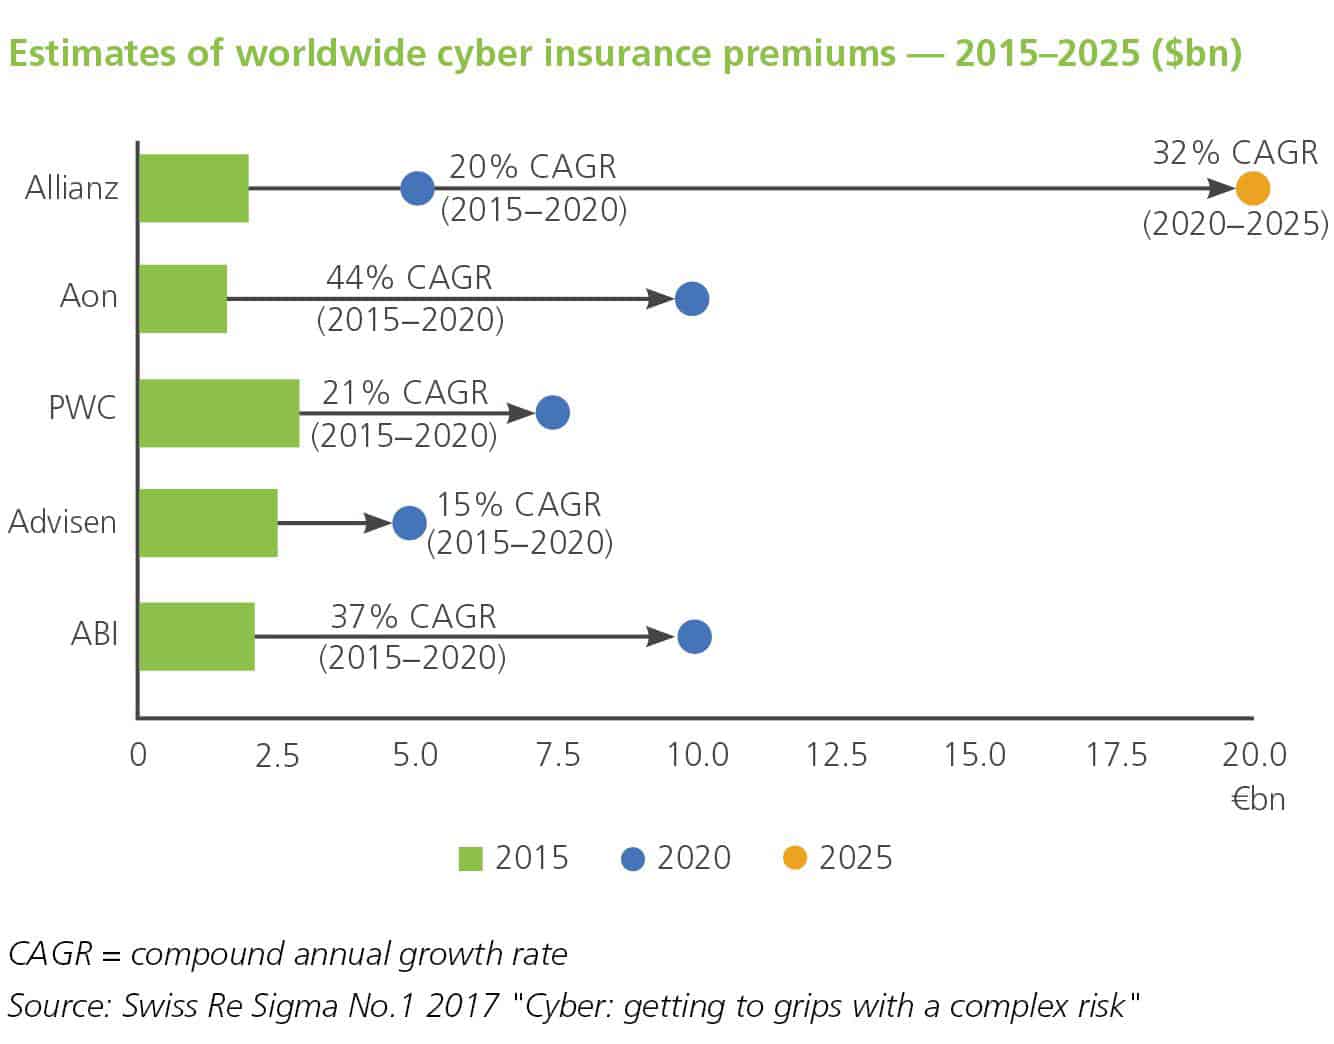 Swiss Re Cyber insurance premiums estimates